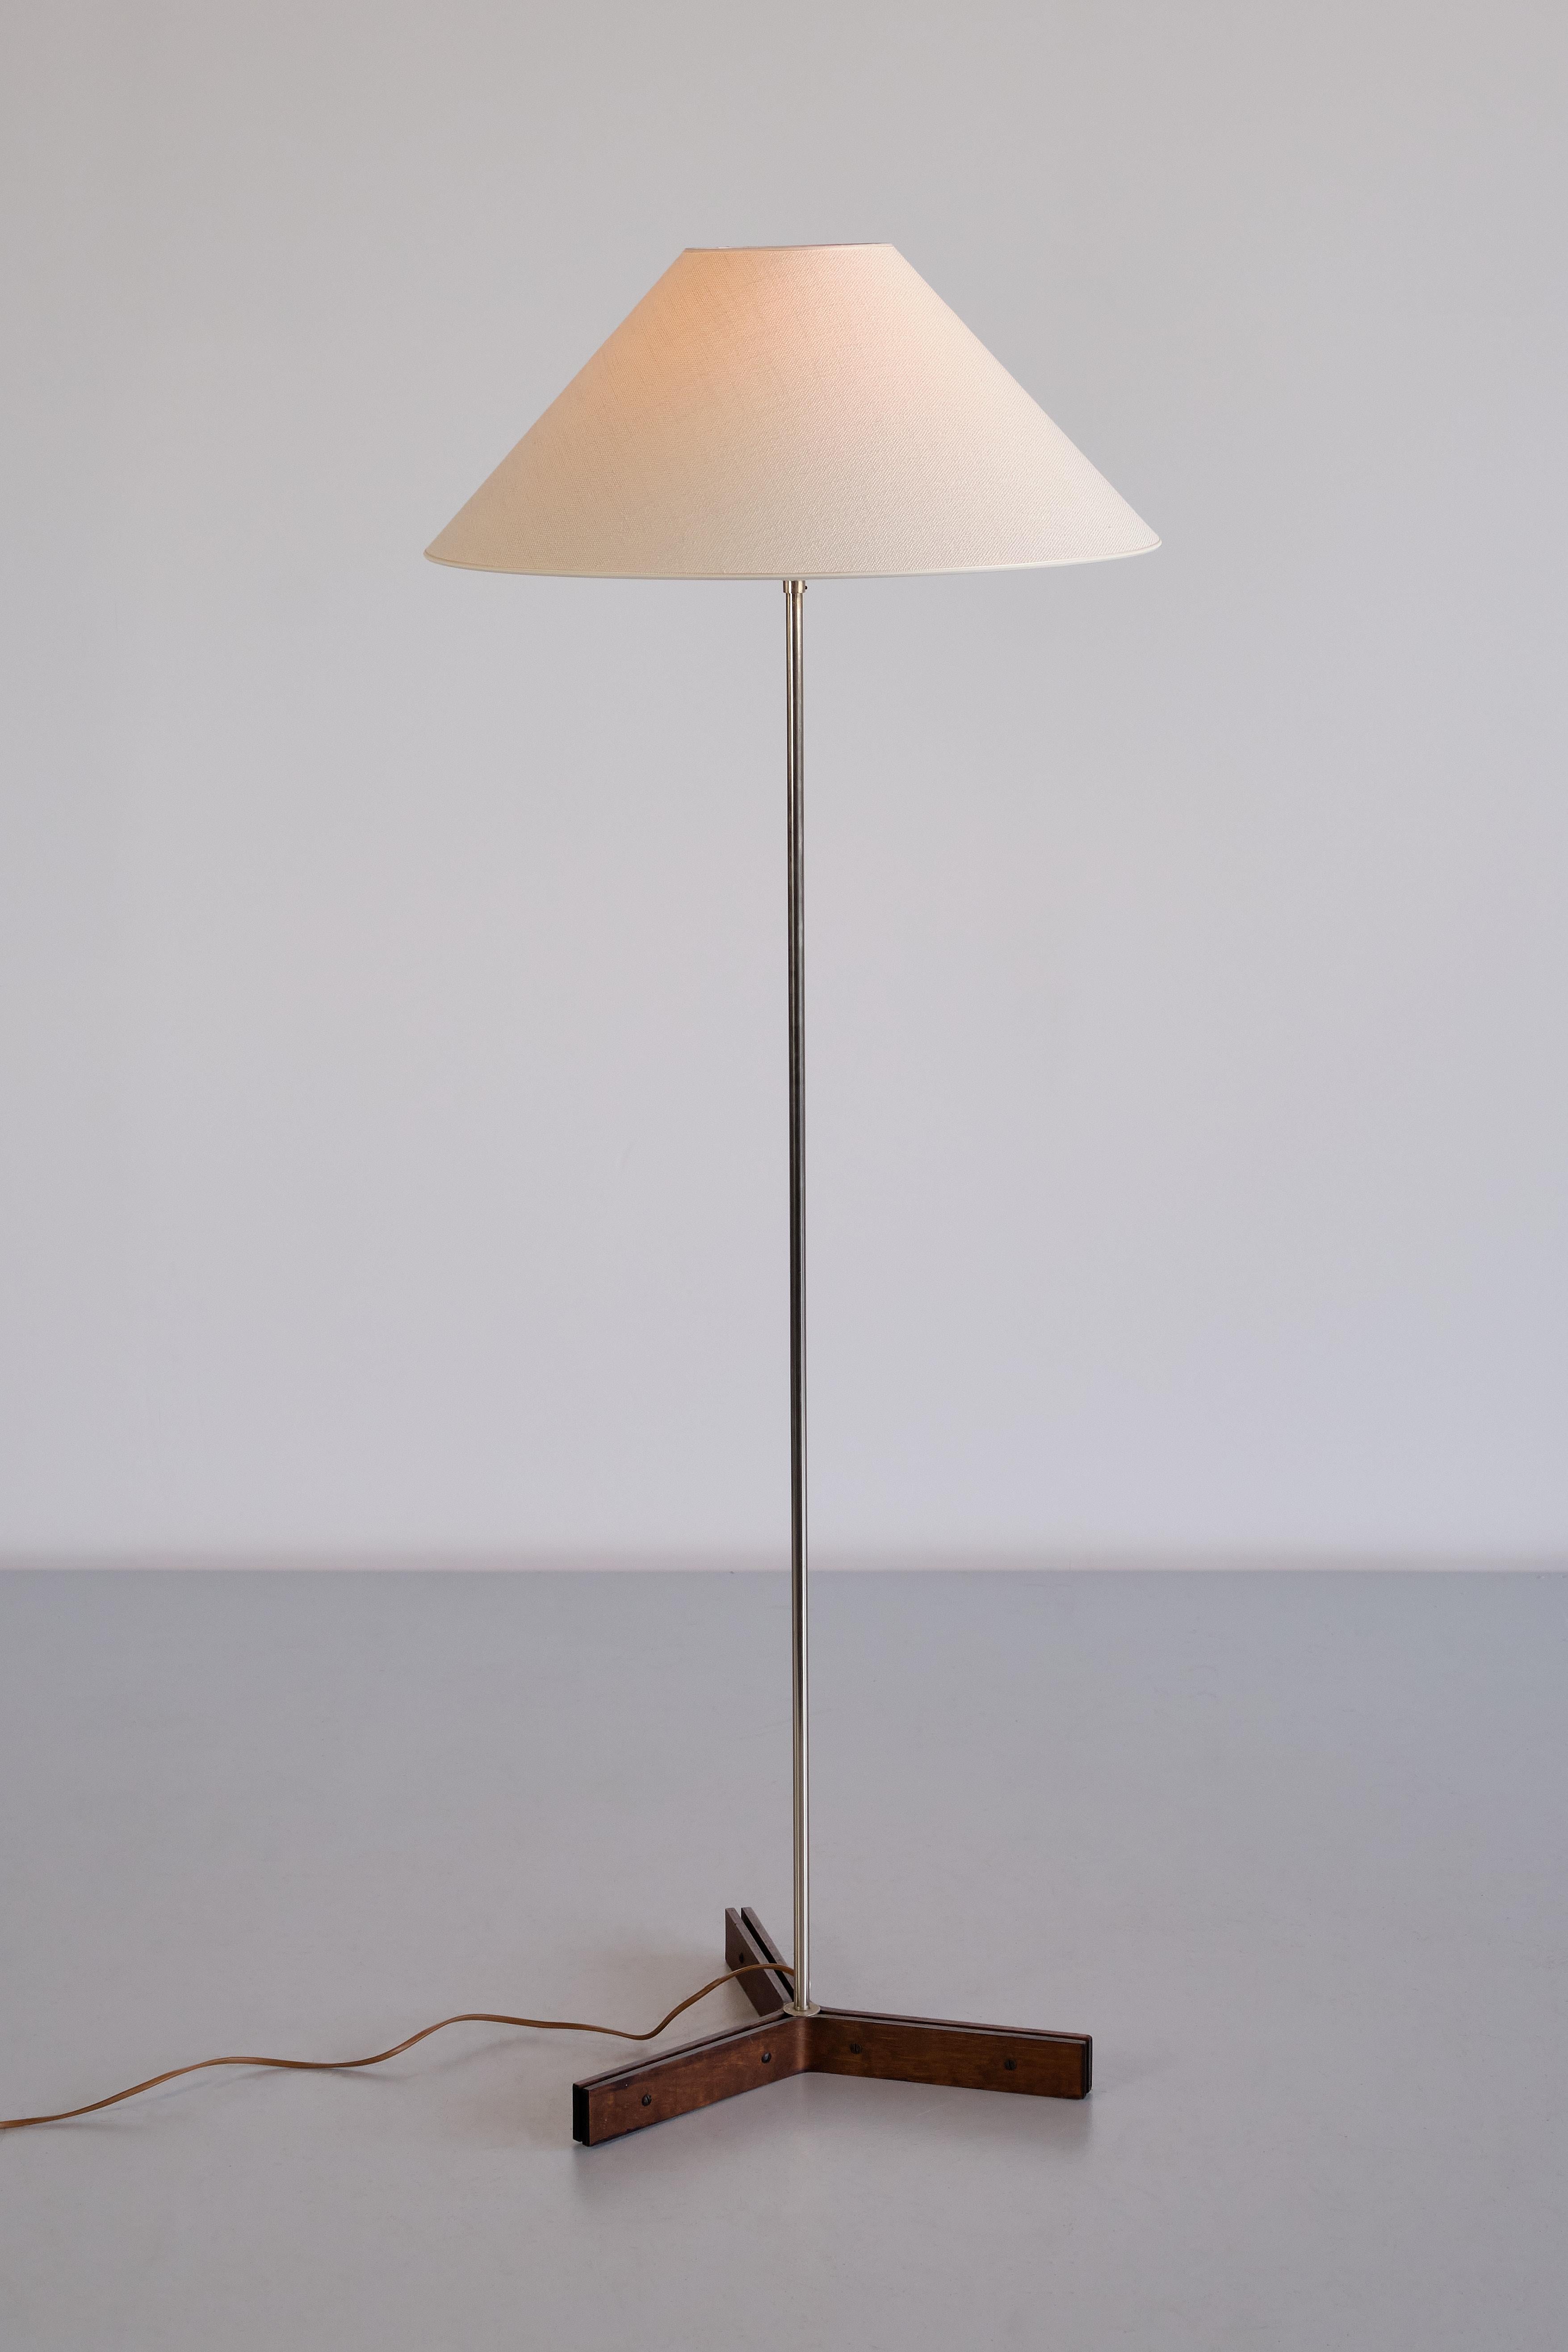 Scandinavian Modern Swedish Modern Floor Lamp by Nybro Armaturfabrik in Wengé & Steel, Sweden, 1970s